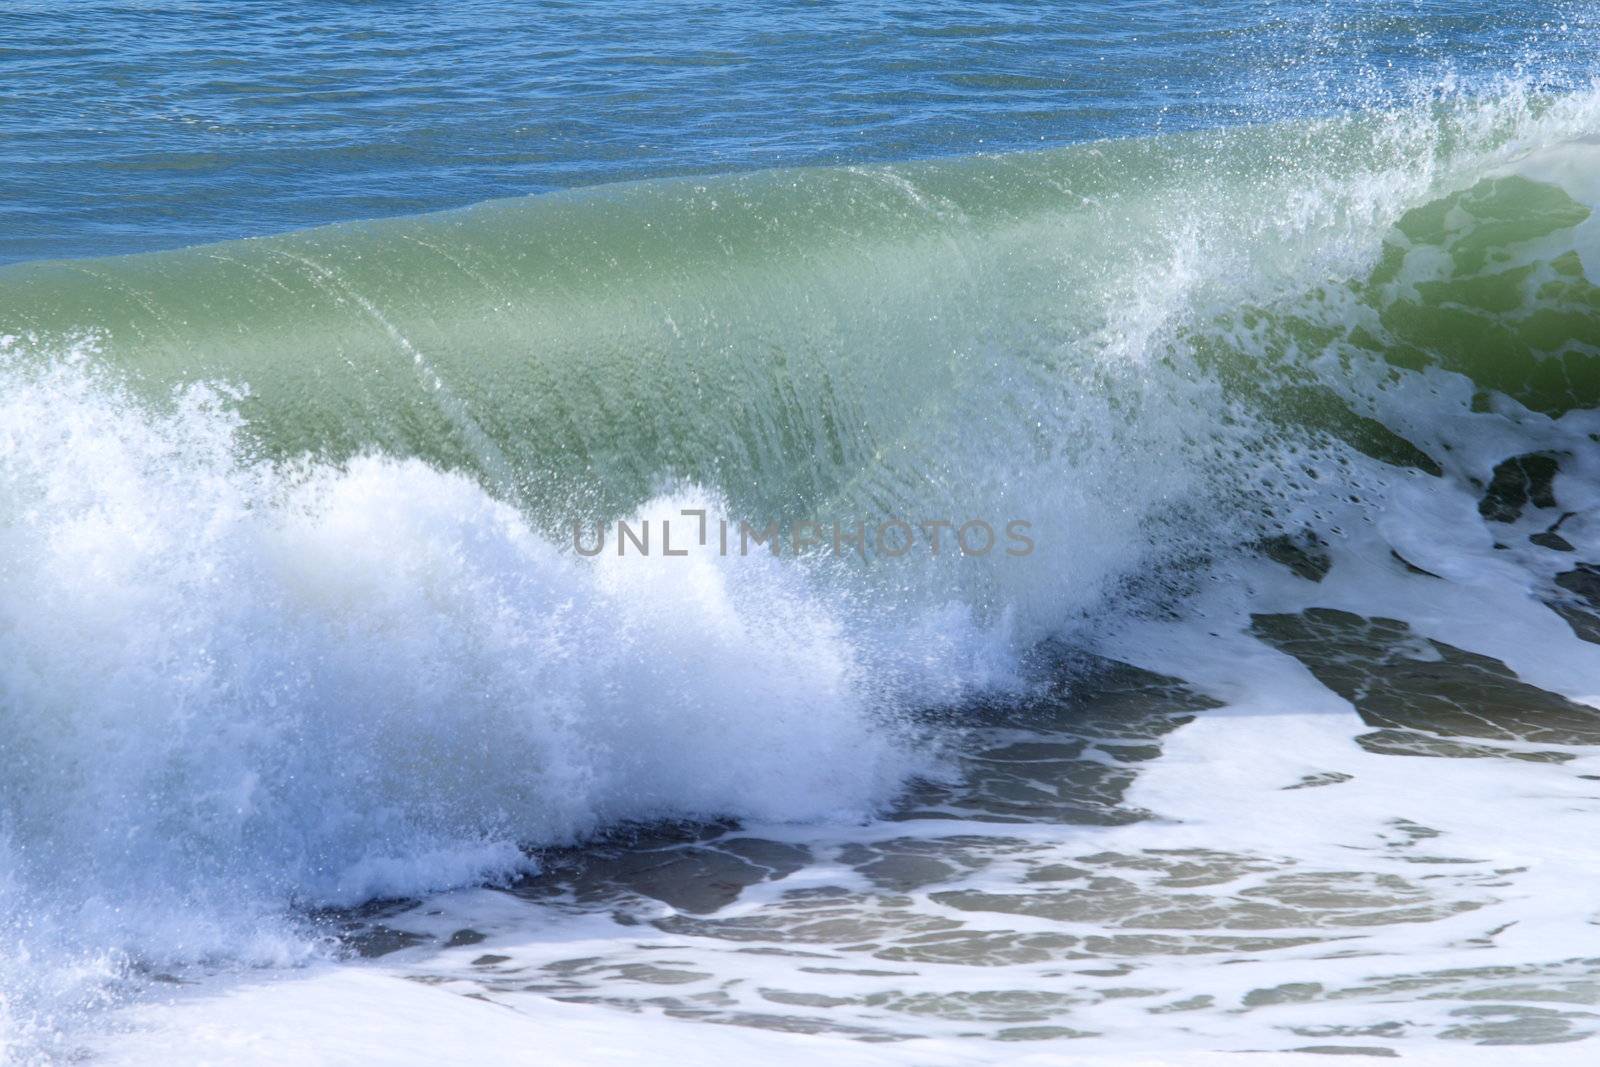 Closeup of a wave breaking near the beach.